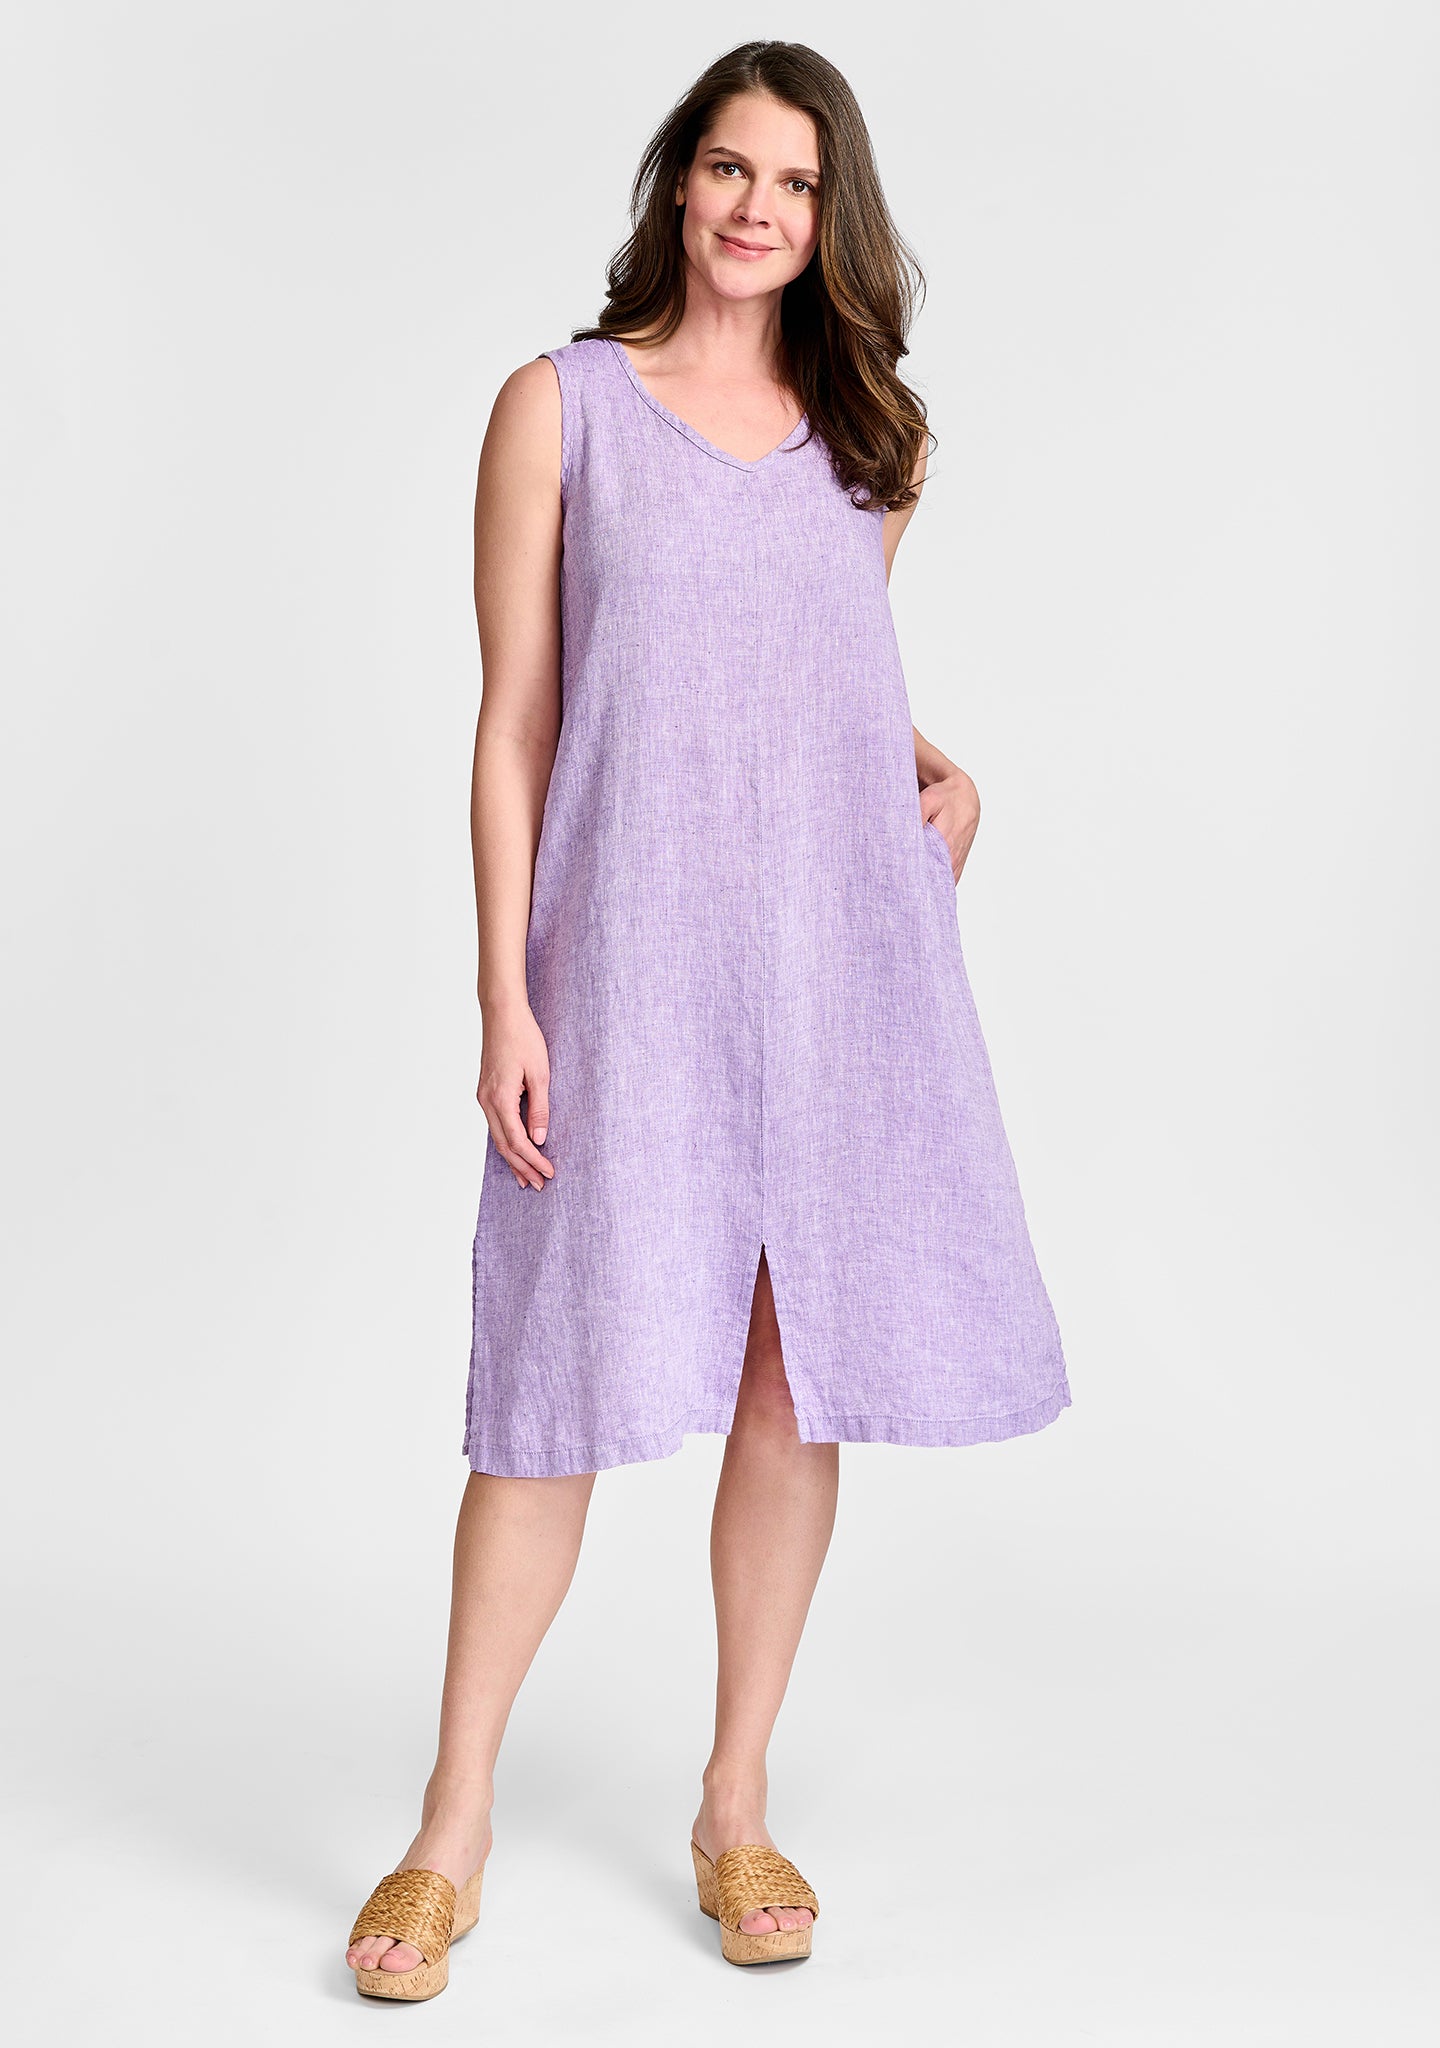 jewel dress linen shift dress purple